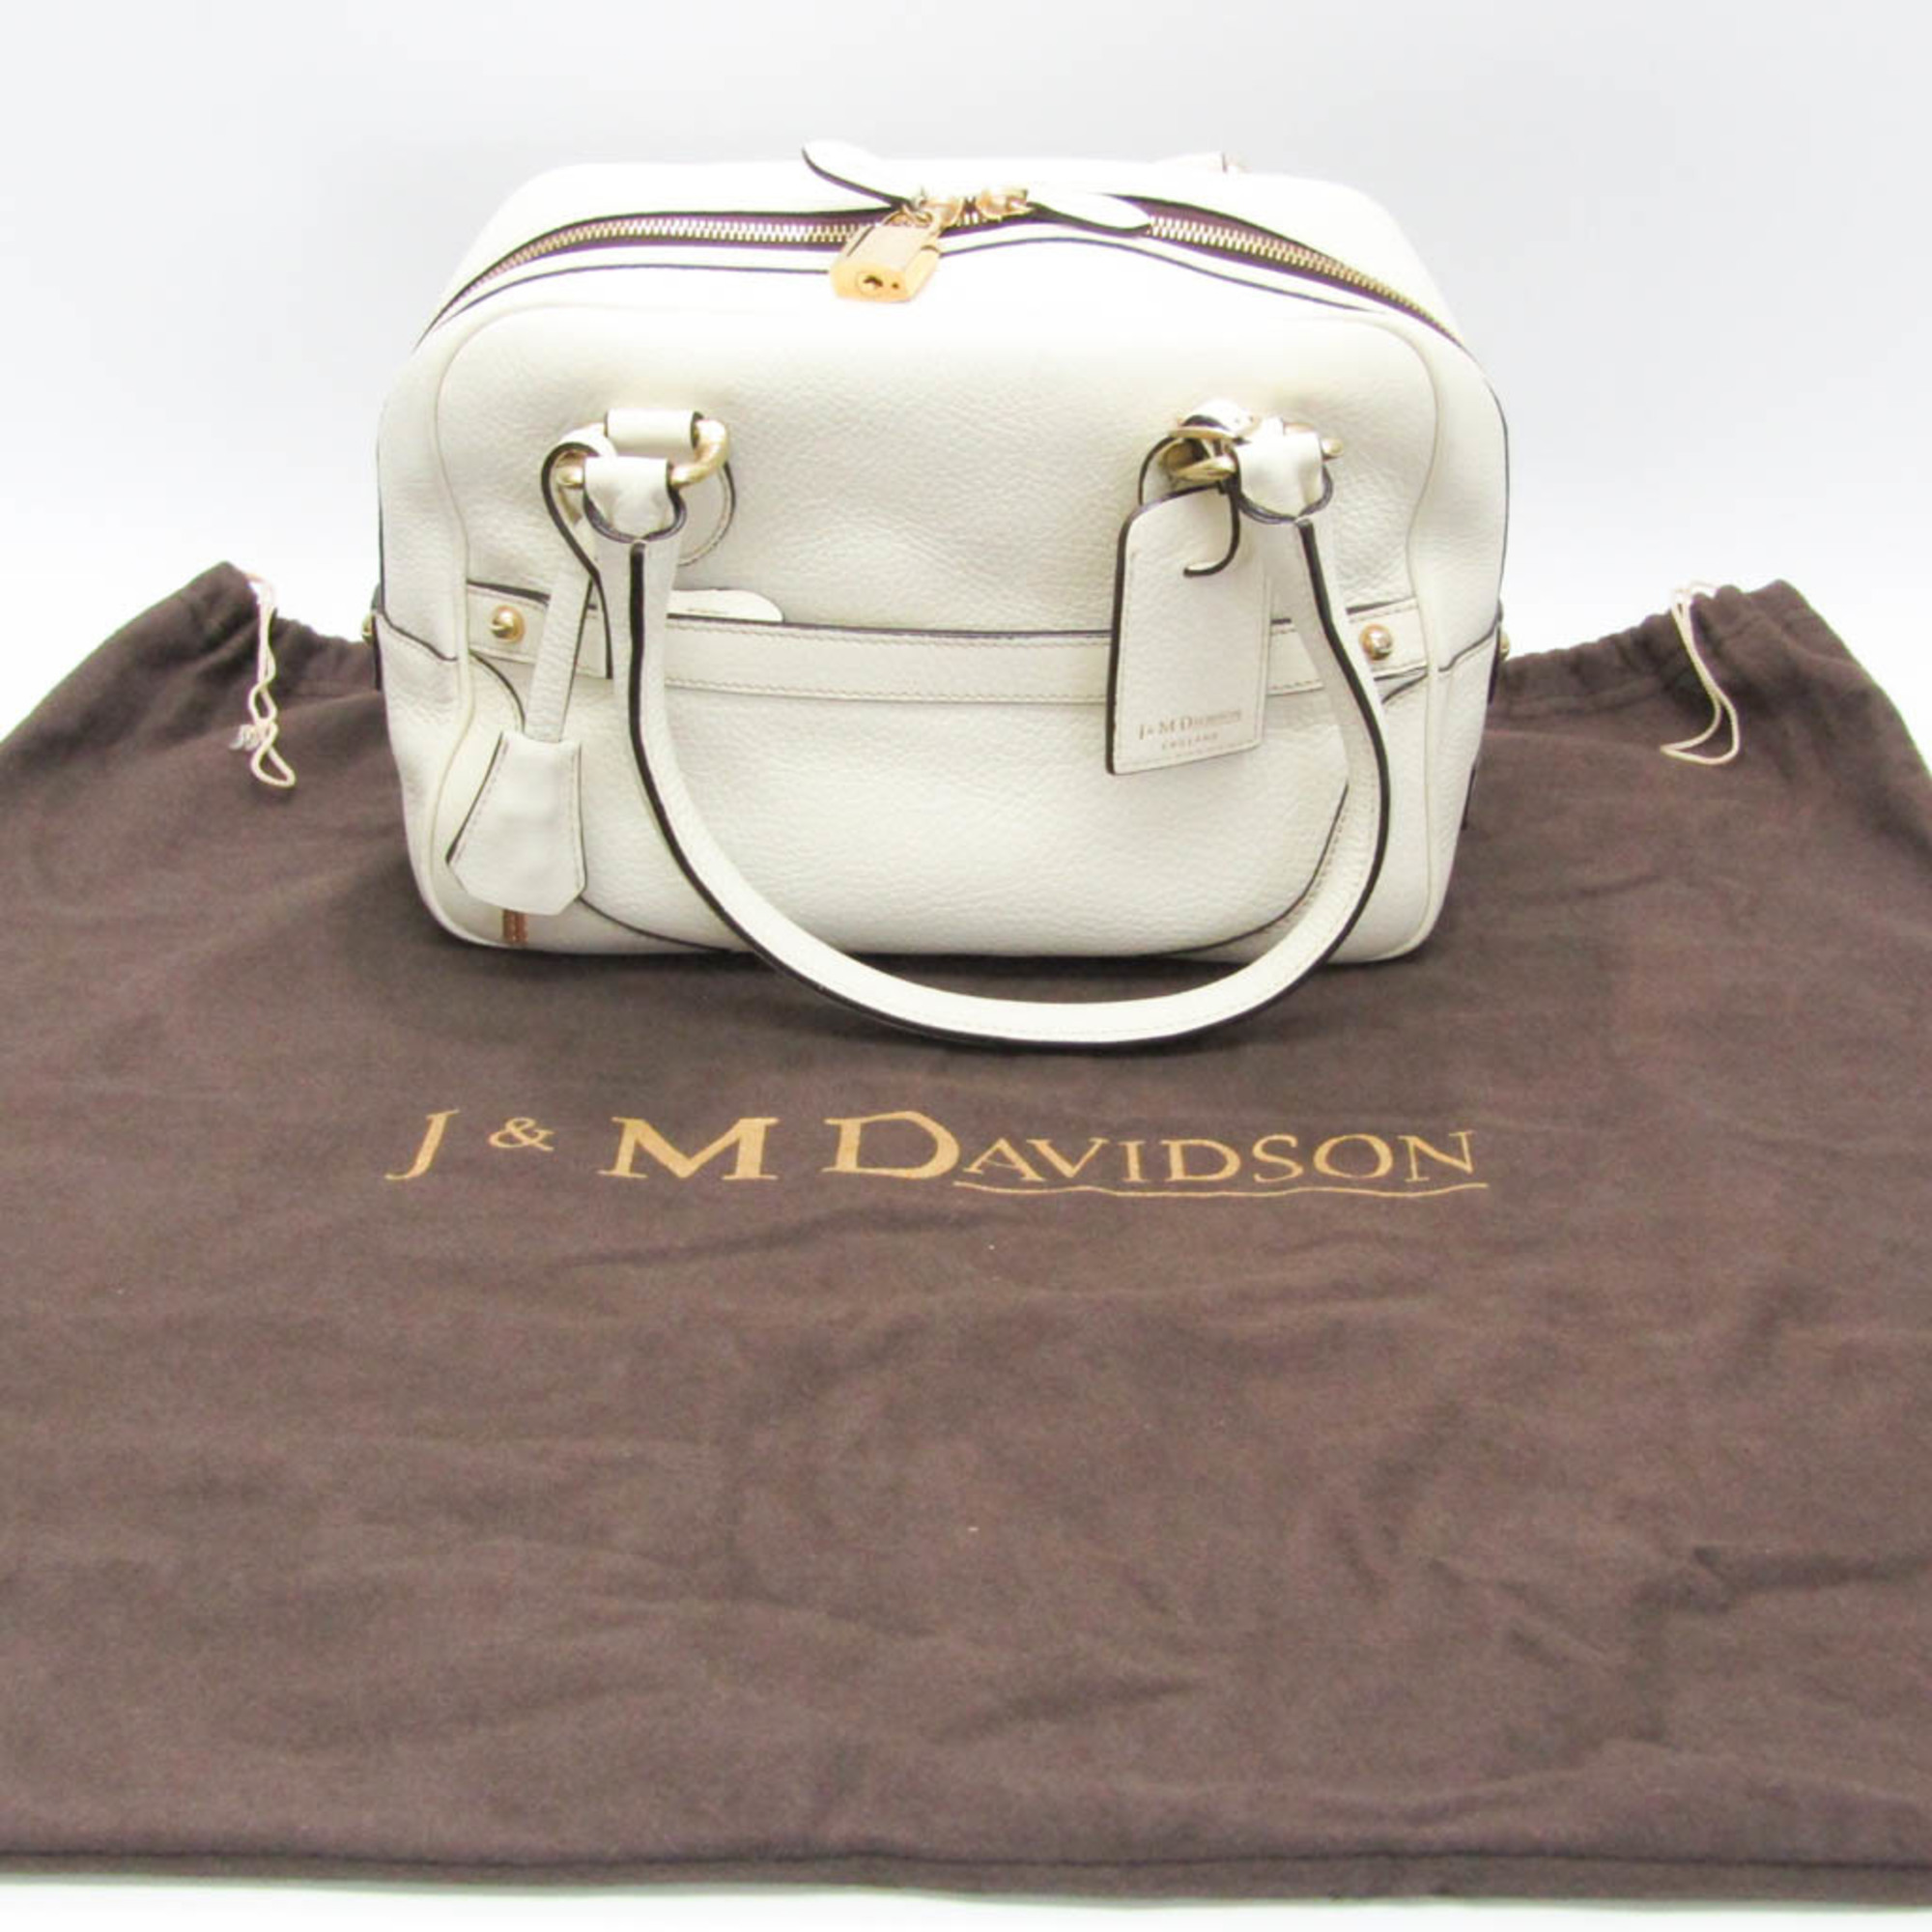 J&M Davidson MIA Women's Leather Handbag Cream